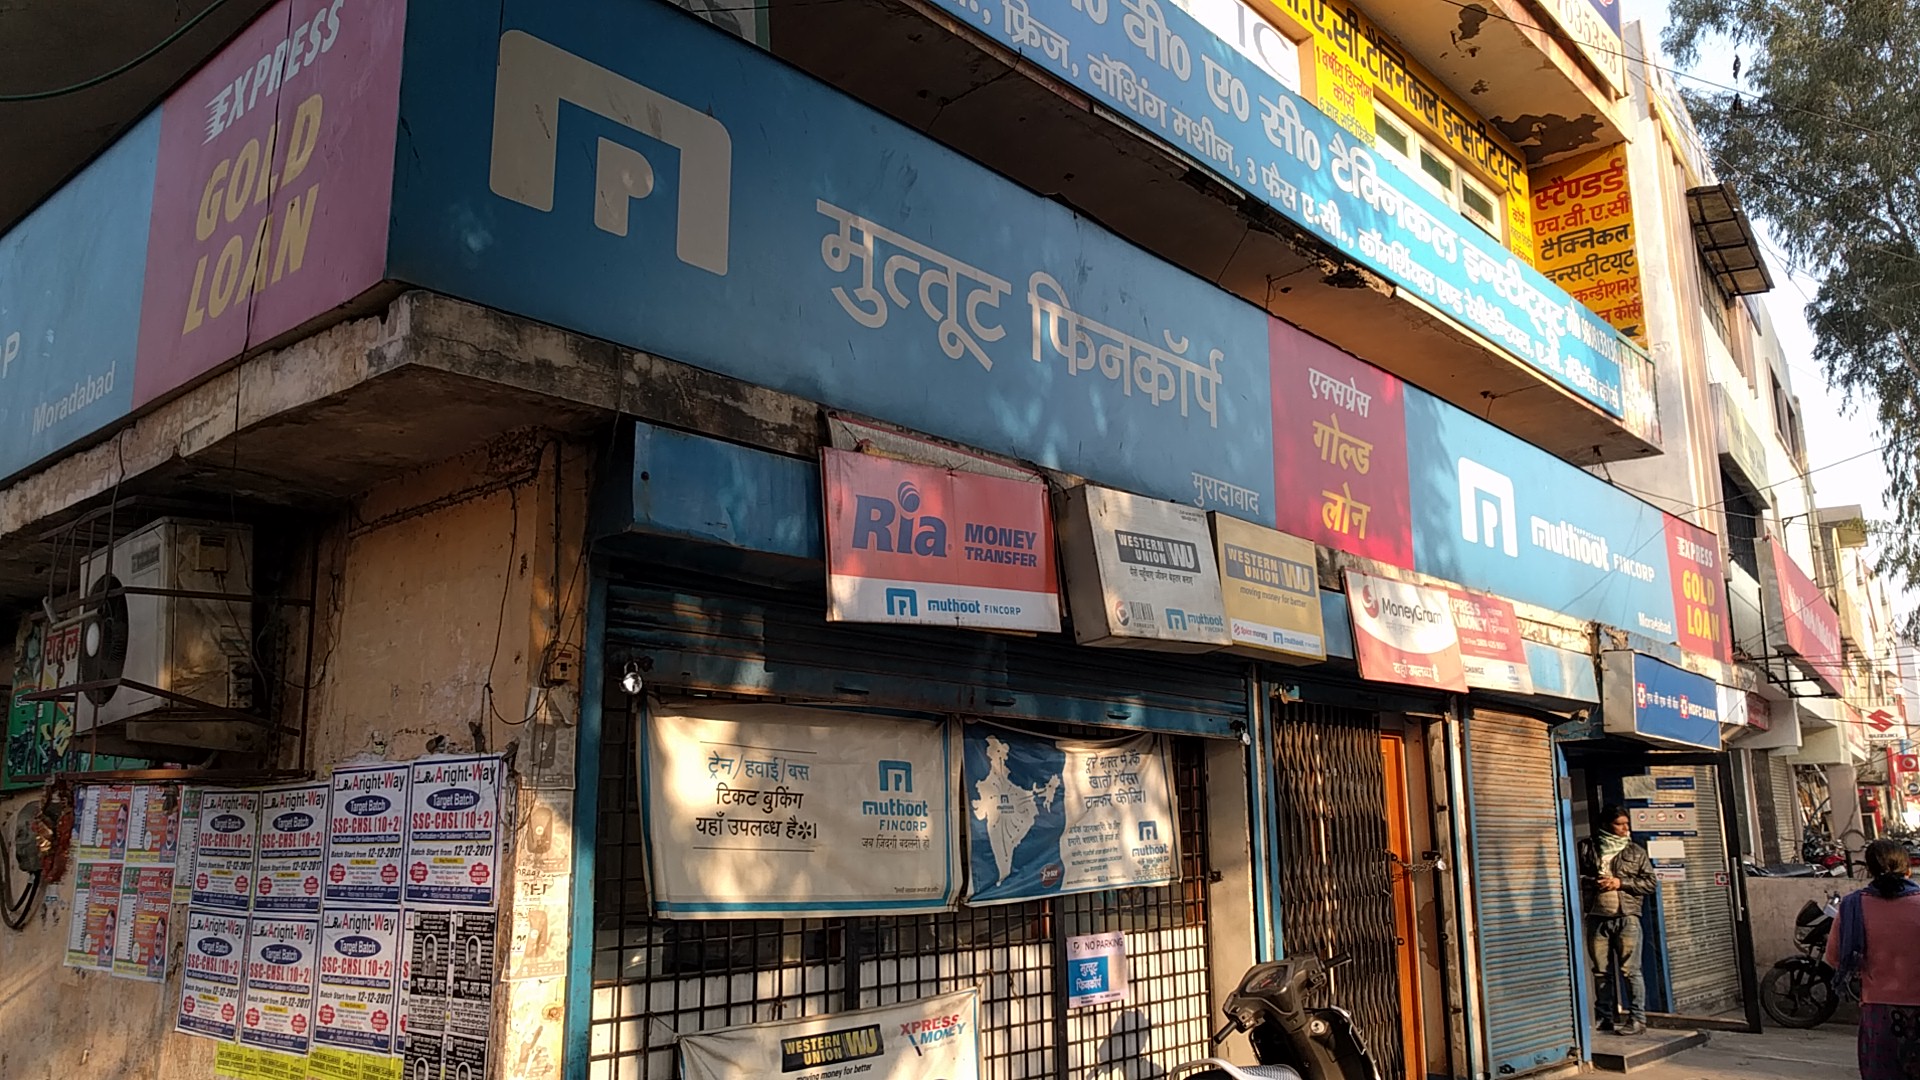 Muthoot Fincorp Gold Loan Services in Gandhi Nagar, Moradabad, Uttar Pradesh